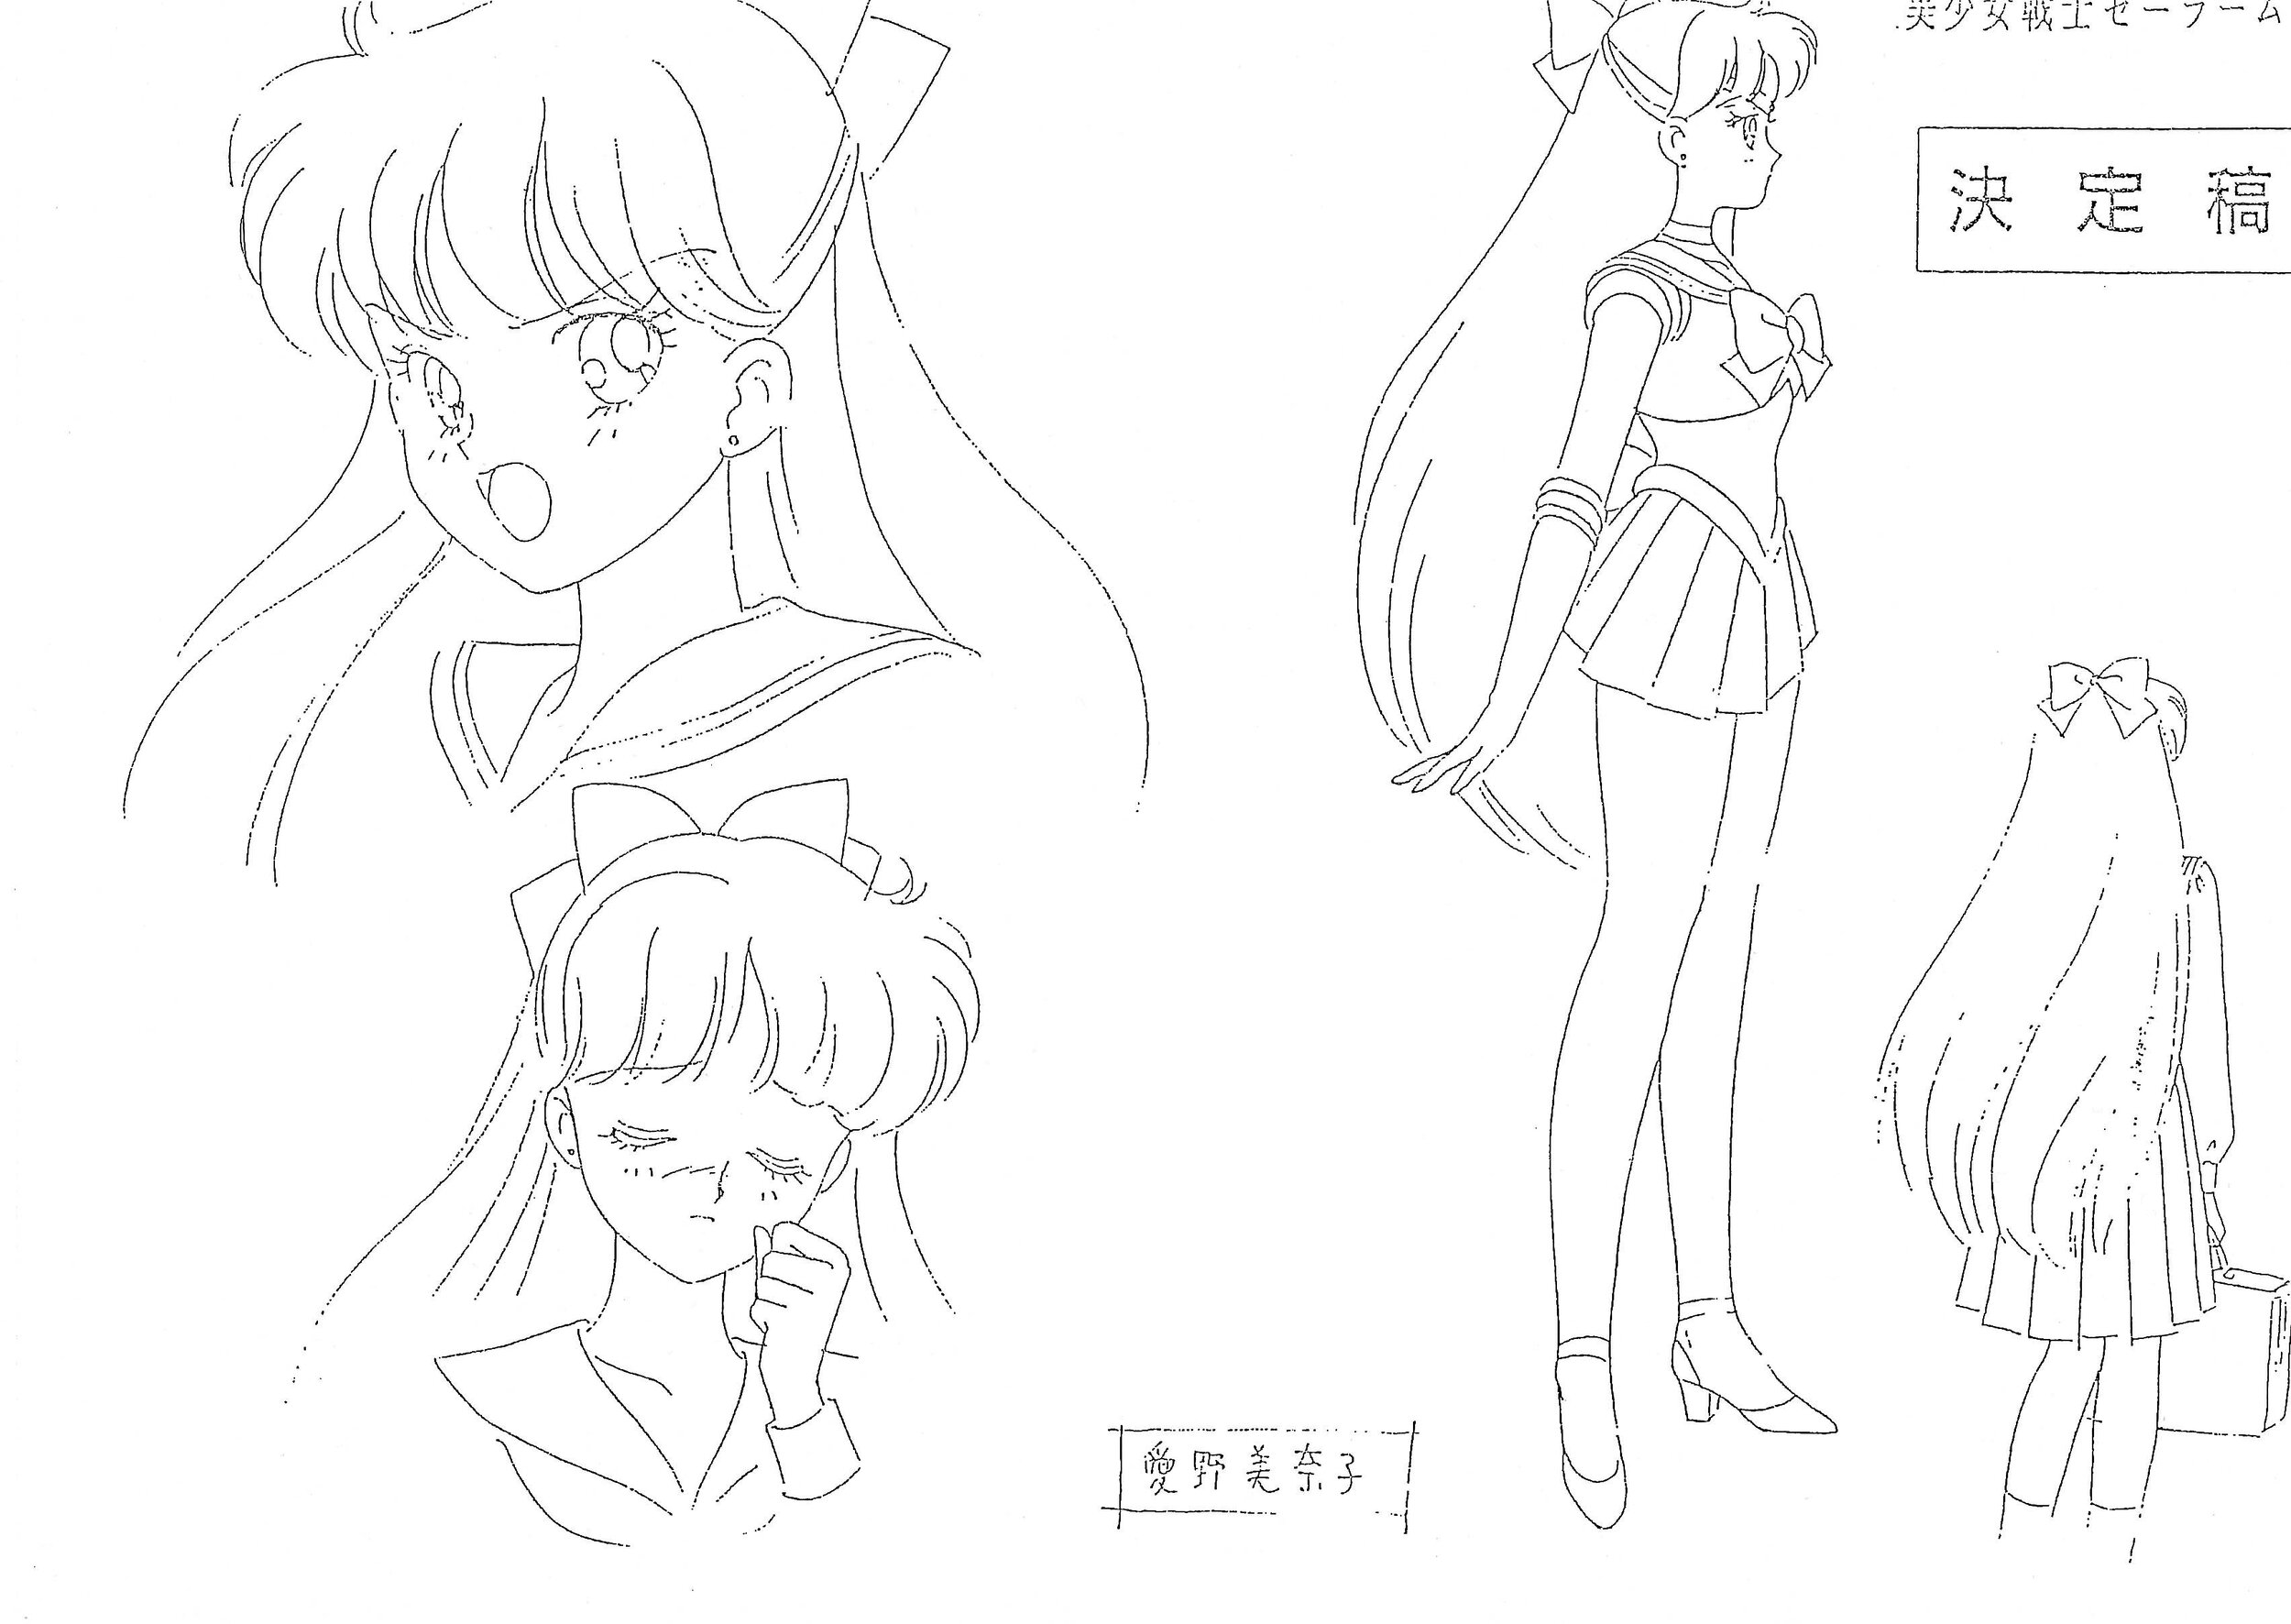 Settei Dreams — Settei from Sailor Moon Crystal Season 3 is now